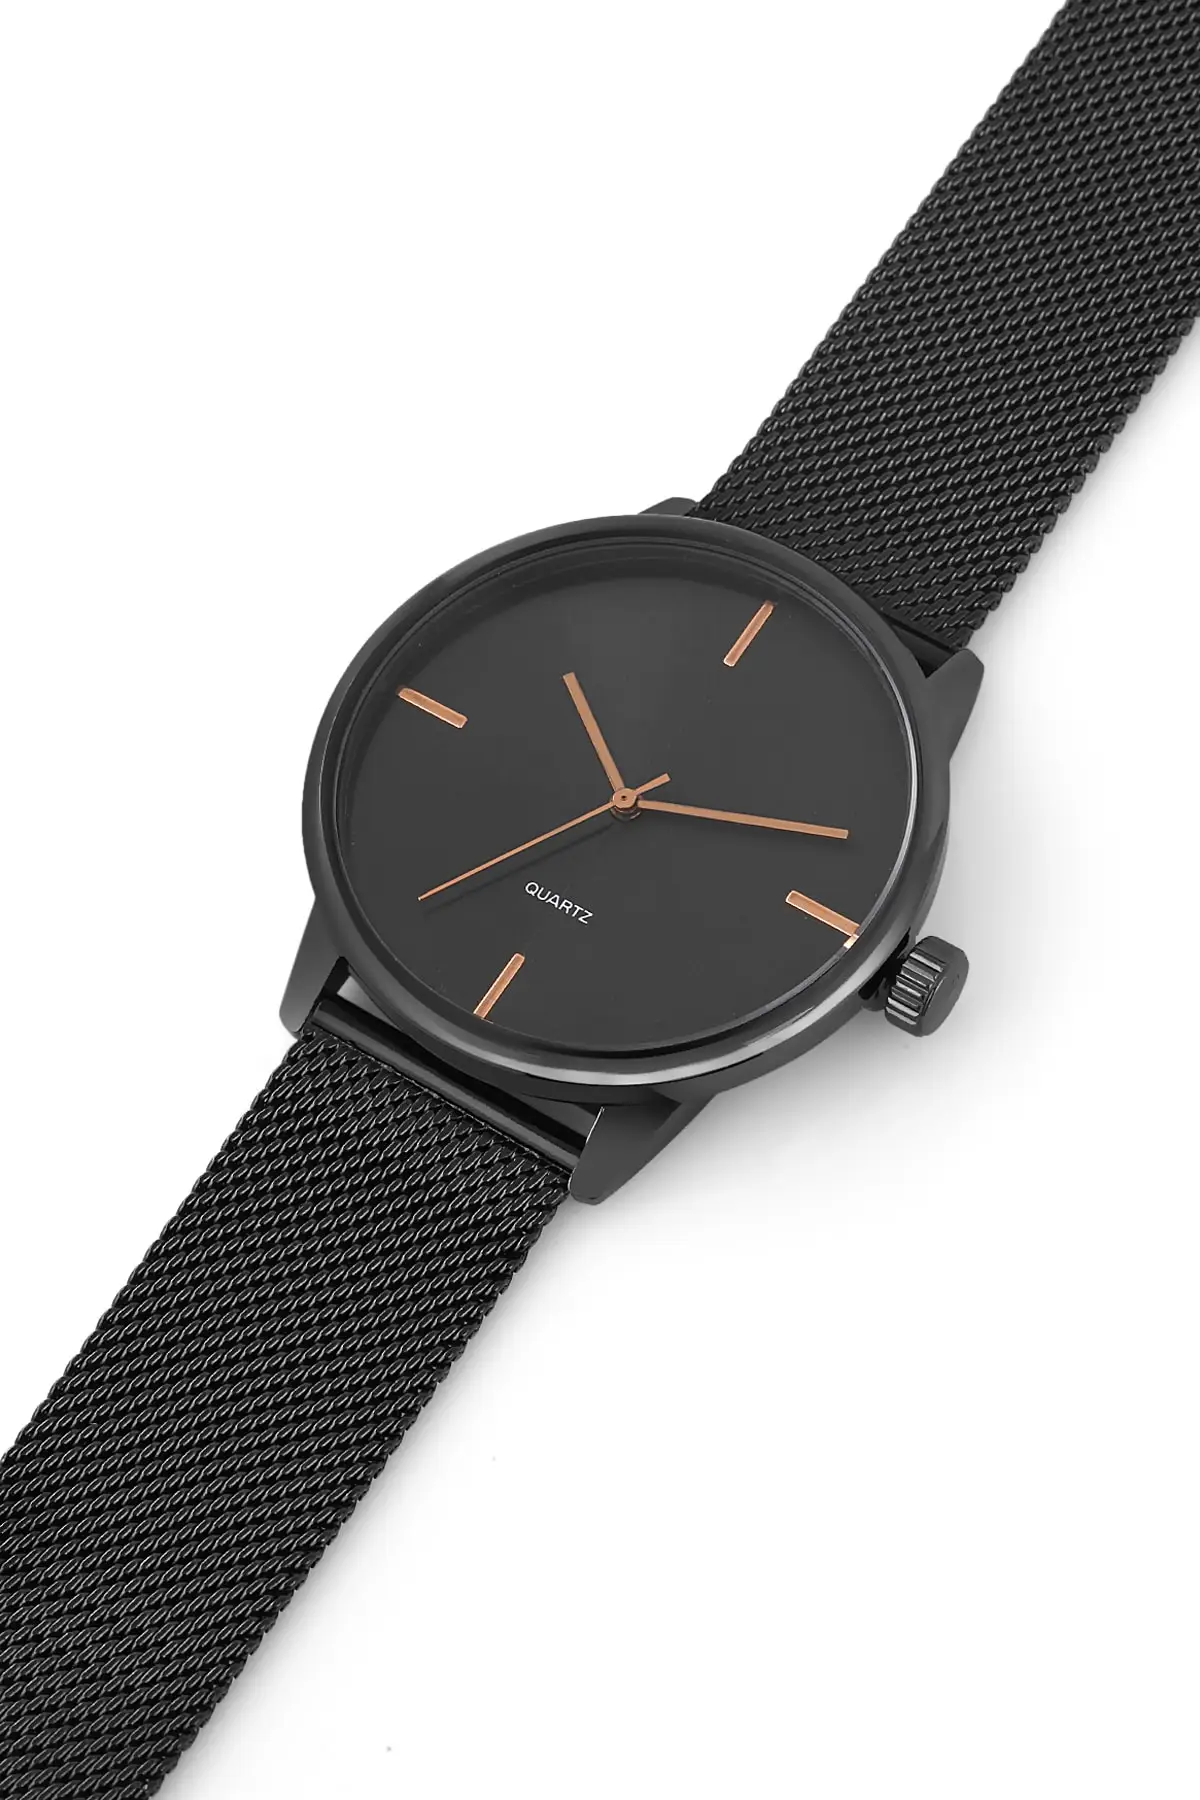 

2022 Watches Unisex black wicker Luxury Fashion Sport Refresh Brands Top Quartz Stylish watch High Quality Premium wristband